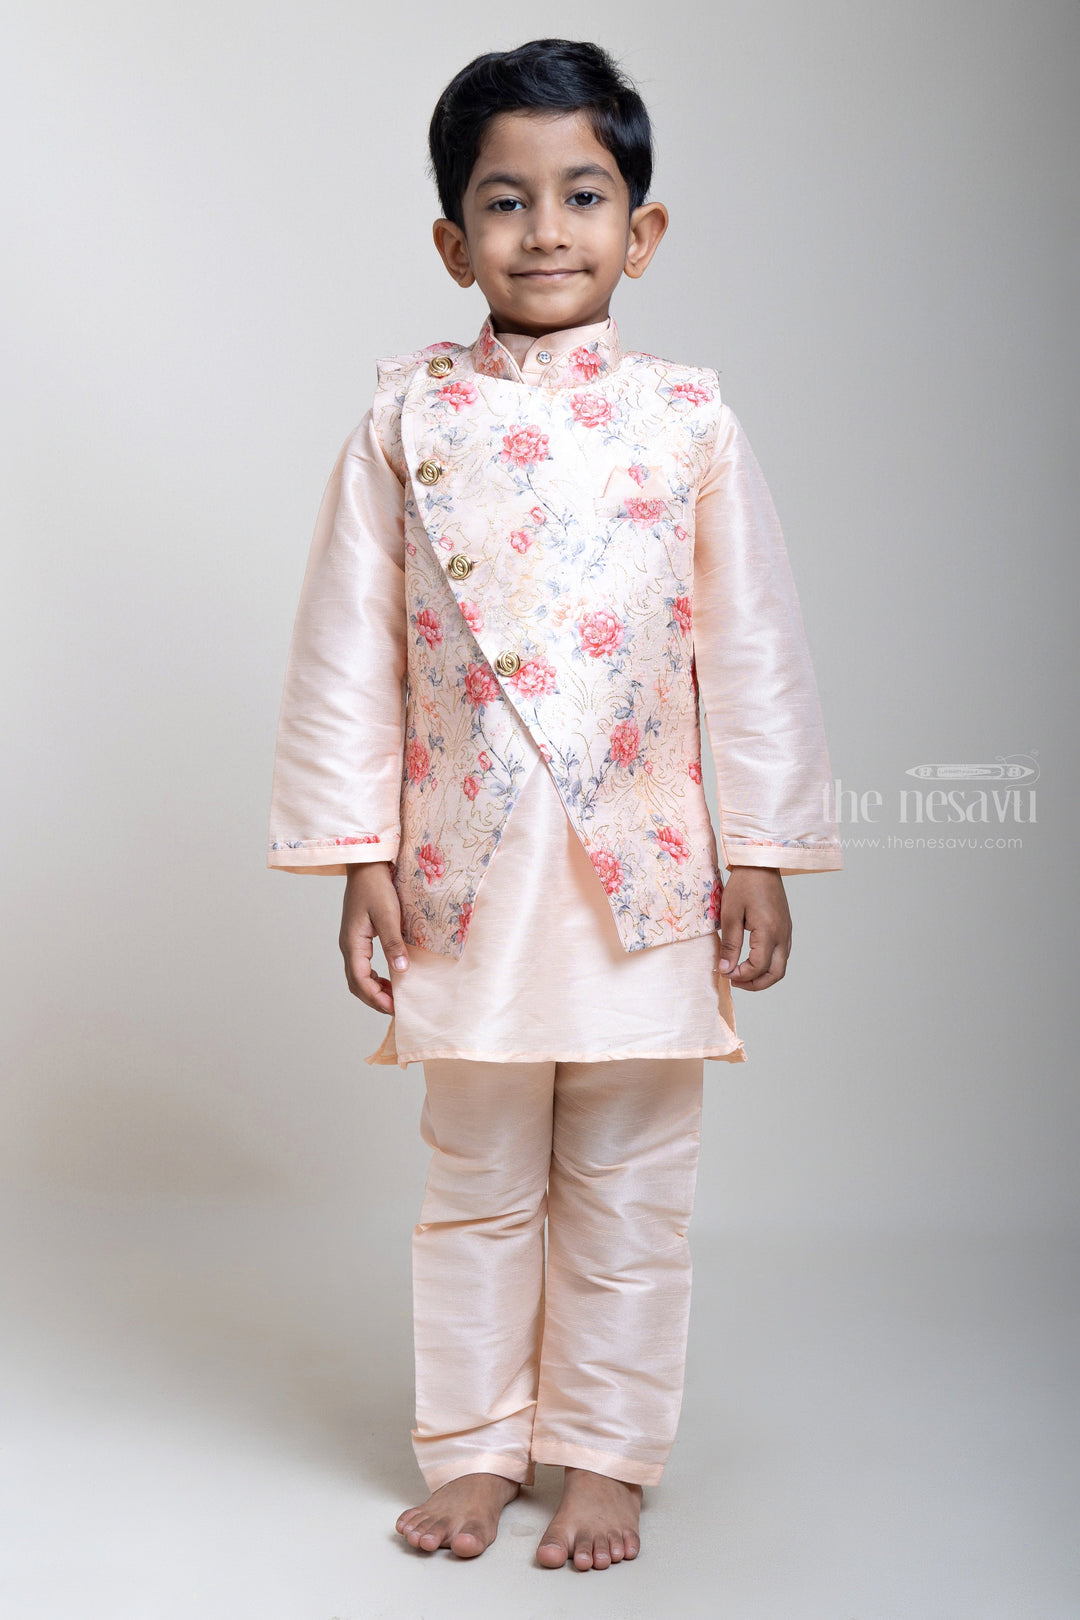 The Nesavu Boys Jacket Sets Perfect Pink Three Piece Kurta And Floral Printed Overcoat For Little Boys psr silks Nesavu 16 (1Y) / Beige / Silk Blend BES254C